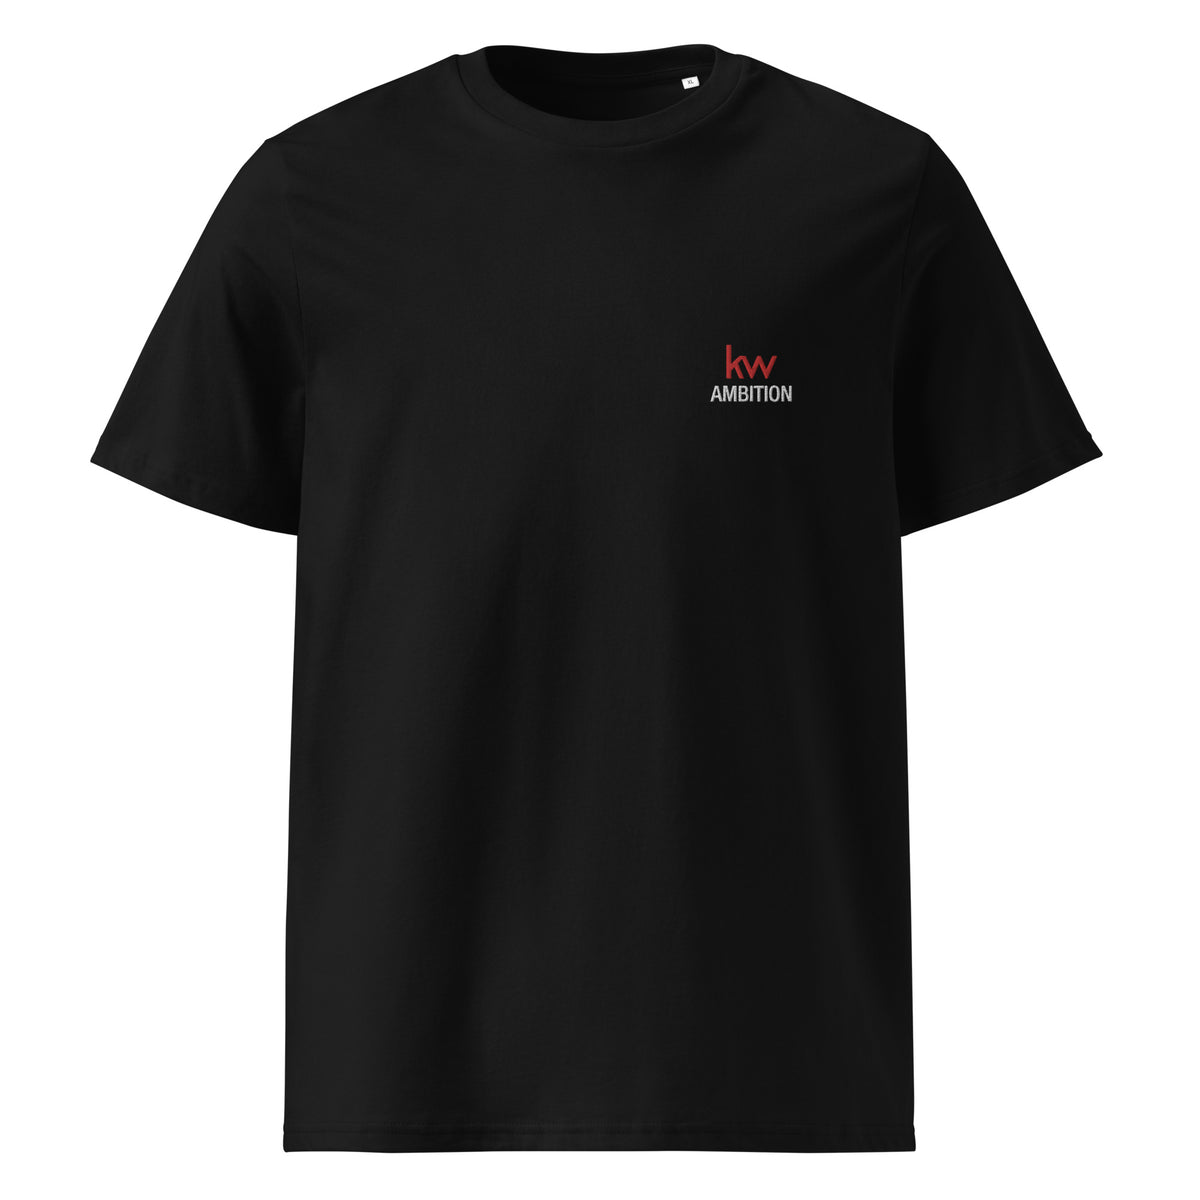 T-Shirt Unisexe Brodé - KW Ambition